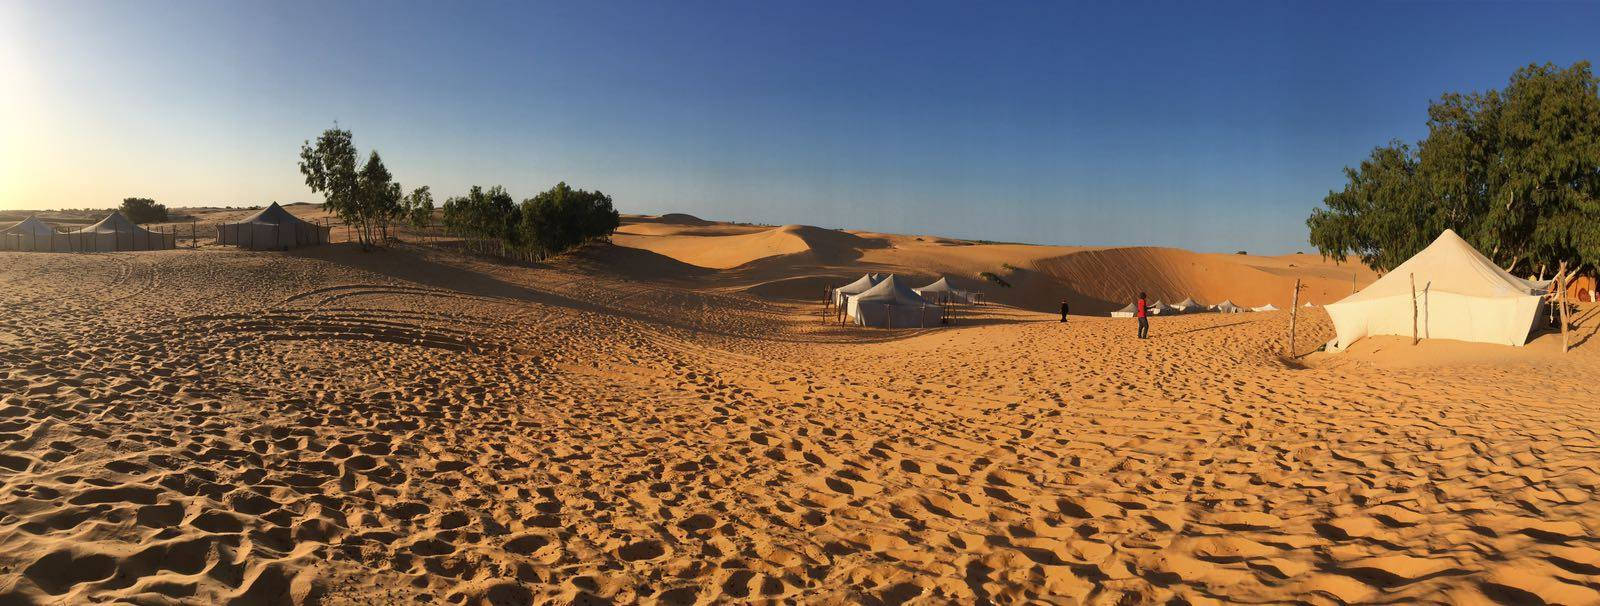 Mauritania Tent In Desert Wallpaper